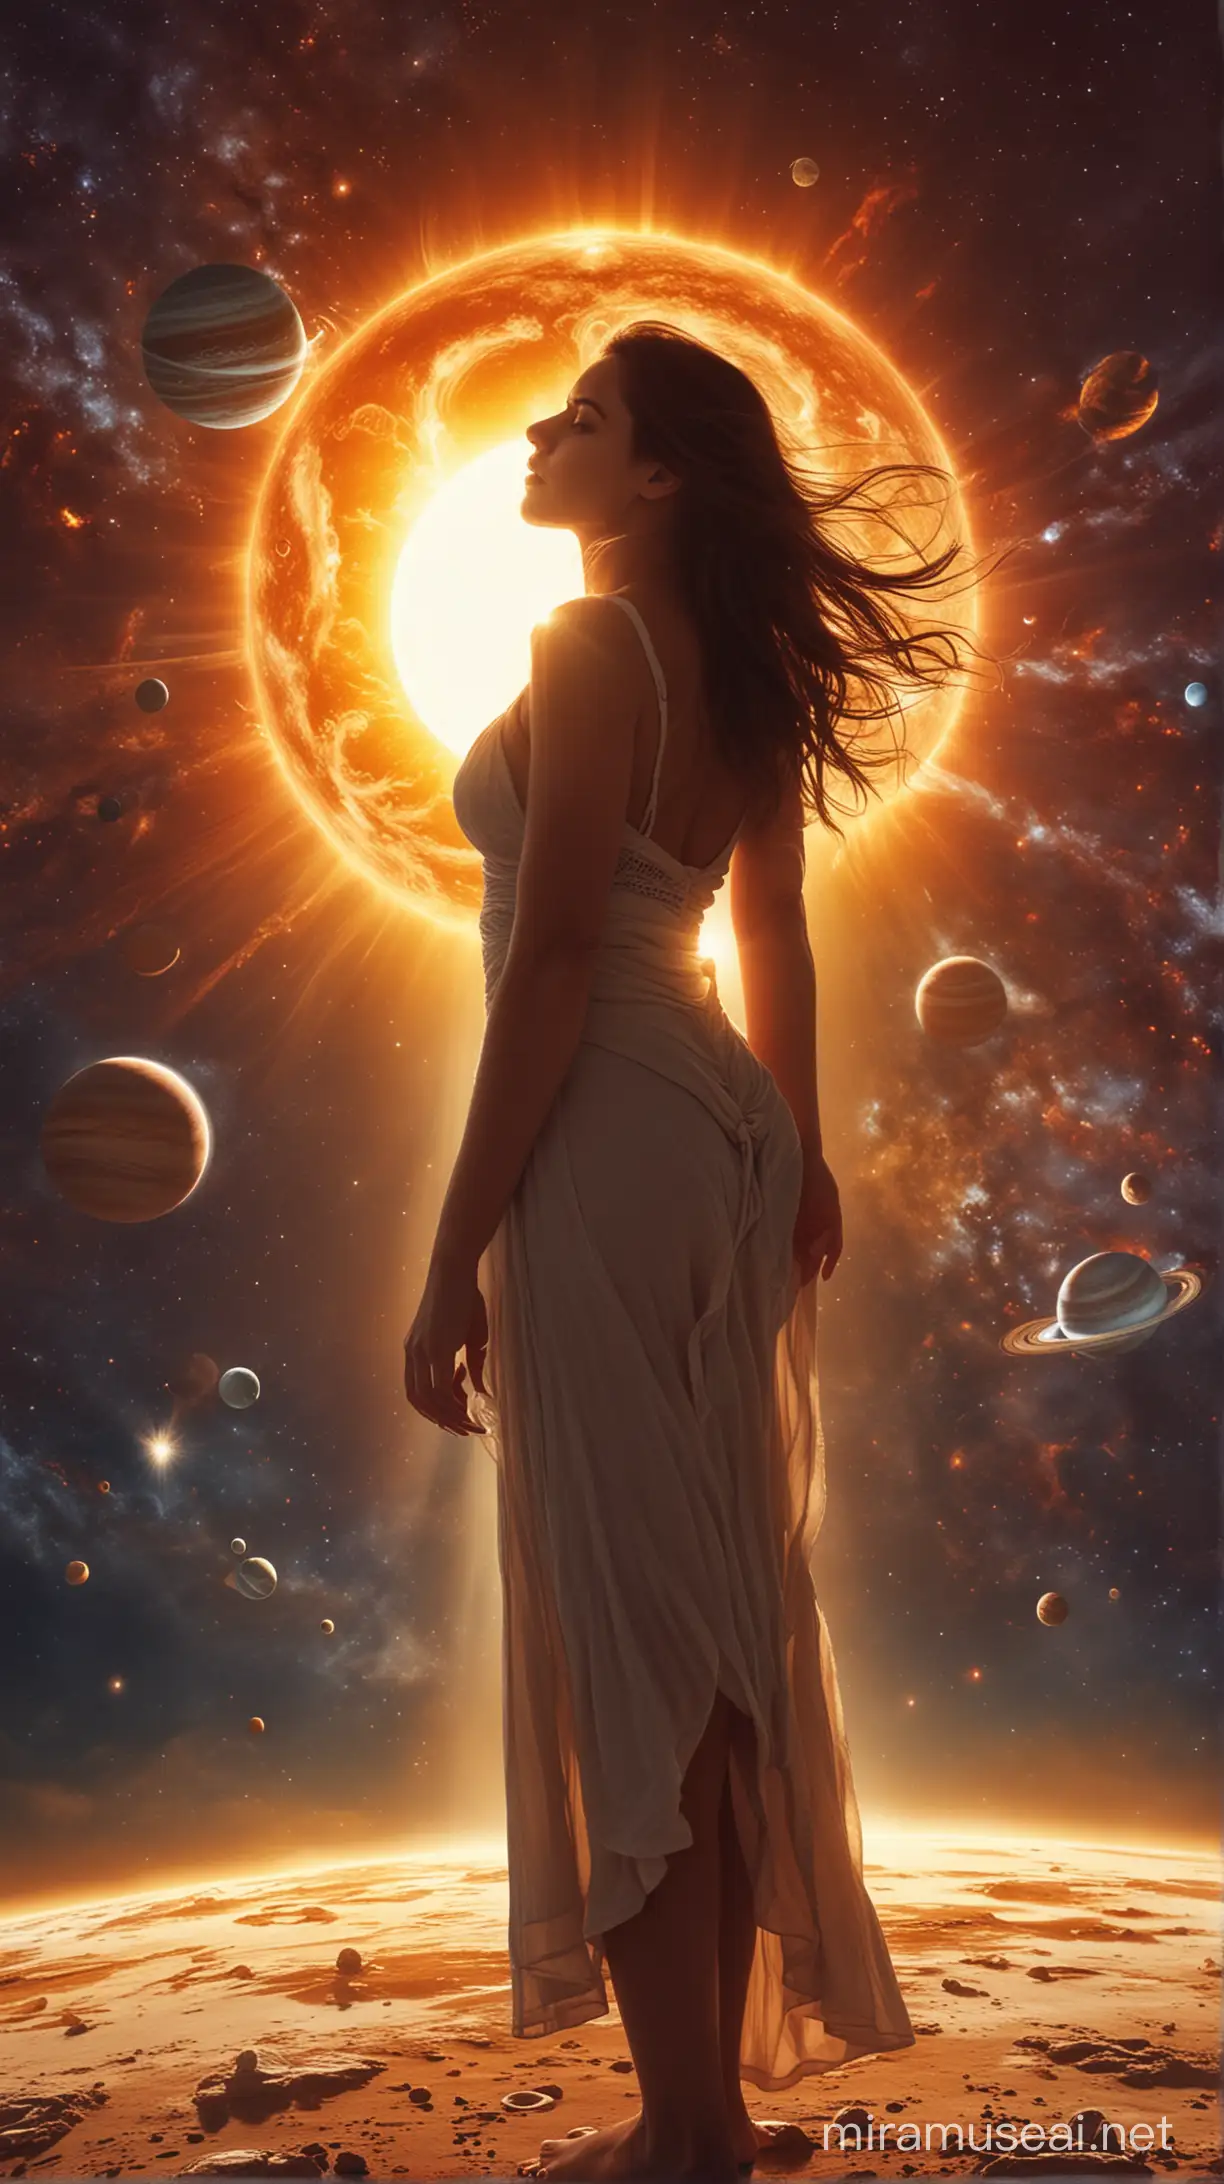 Woman Contemplating Universe Amongst Sun and Planets